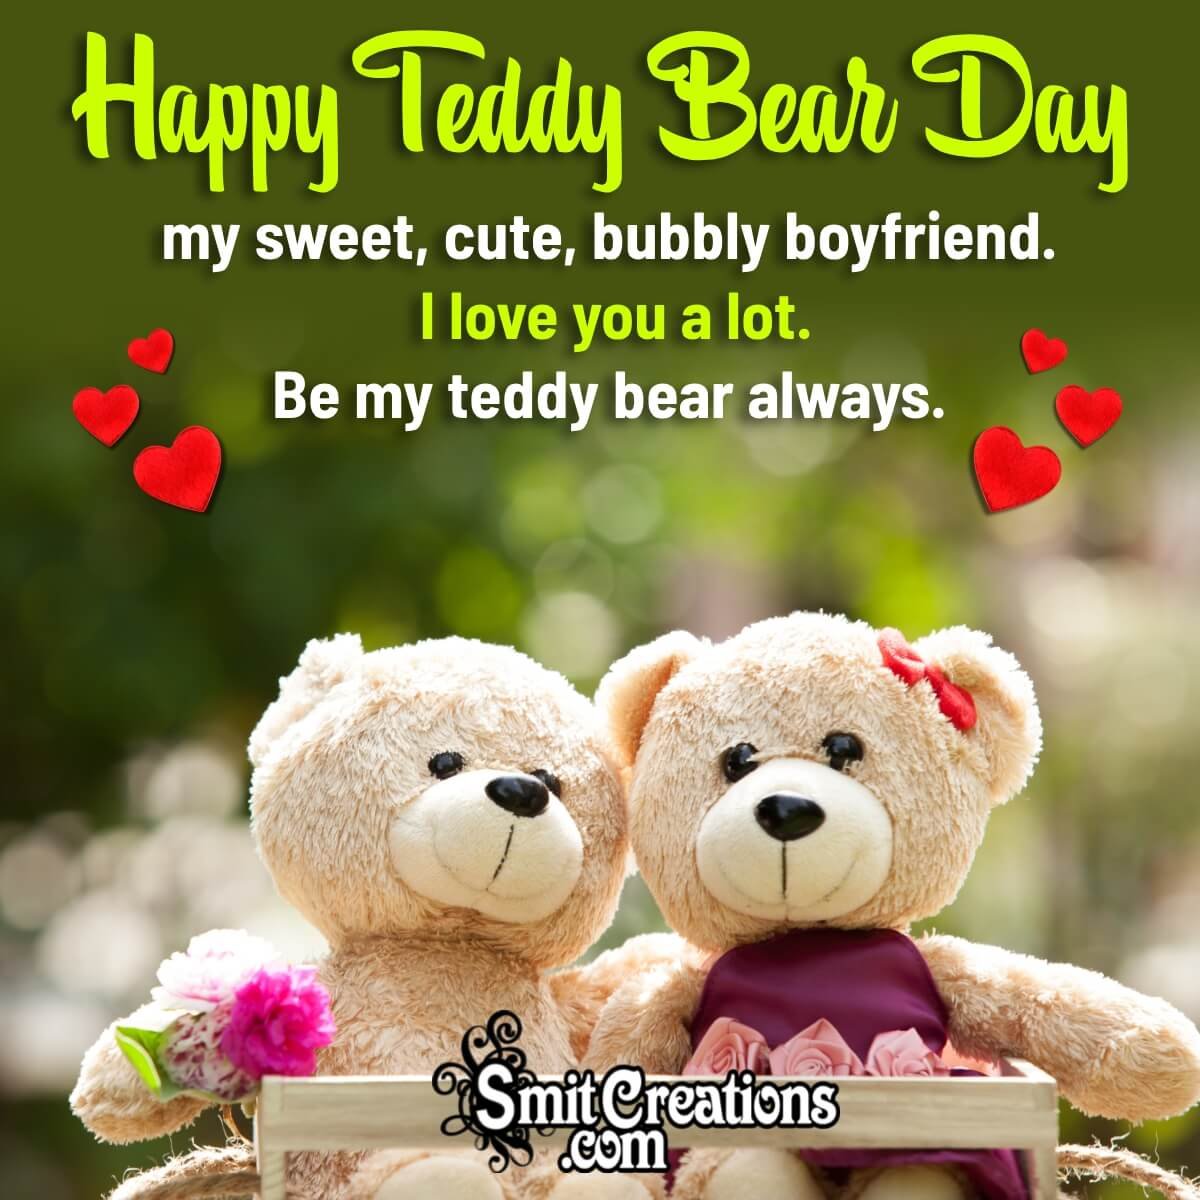 Happy Teddy Bear Day Wishes For Boyfriend